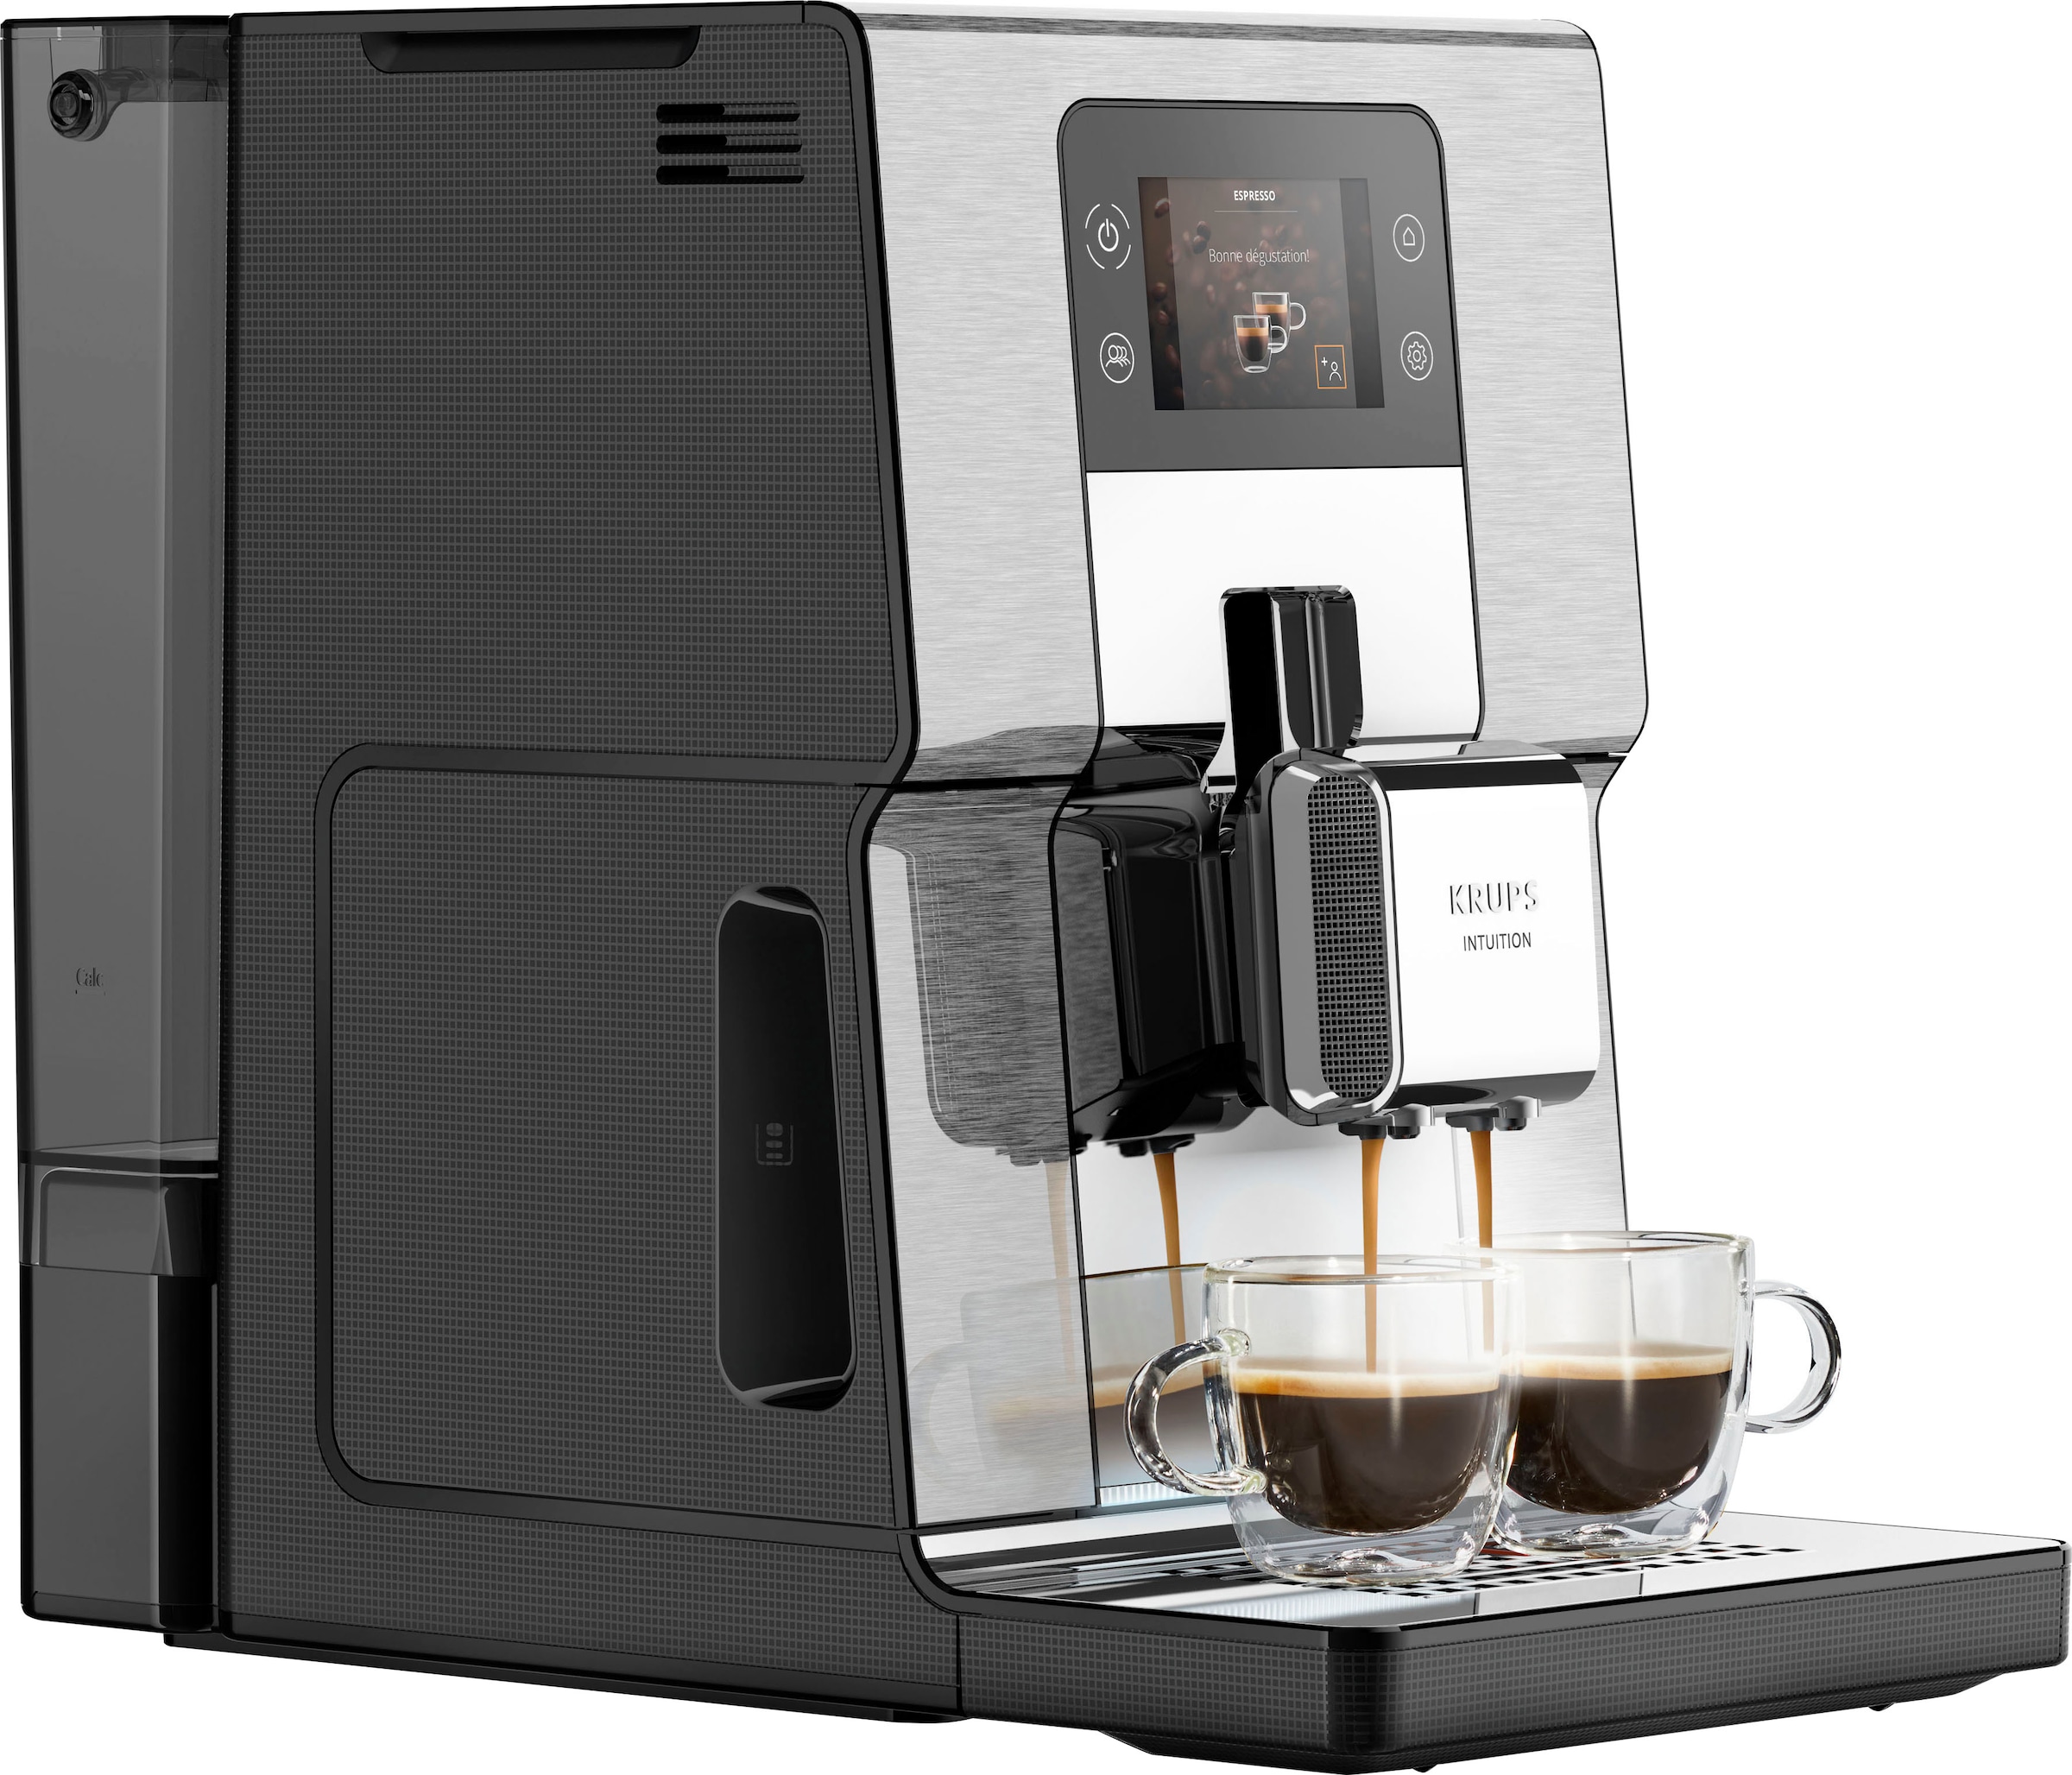 Krups Kaffeevollautomat und Farb-Touchscreen Intuition geräuscharm, jetzt Experience+«, OTTO »EA877D Heiß- kaufen 21 Kaltgetränke-Spezialitäten, bei